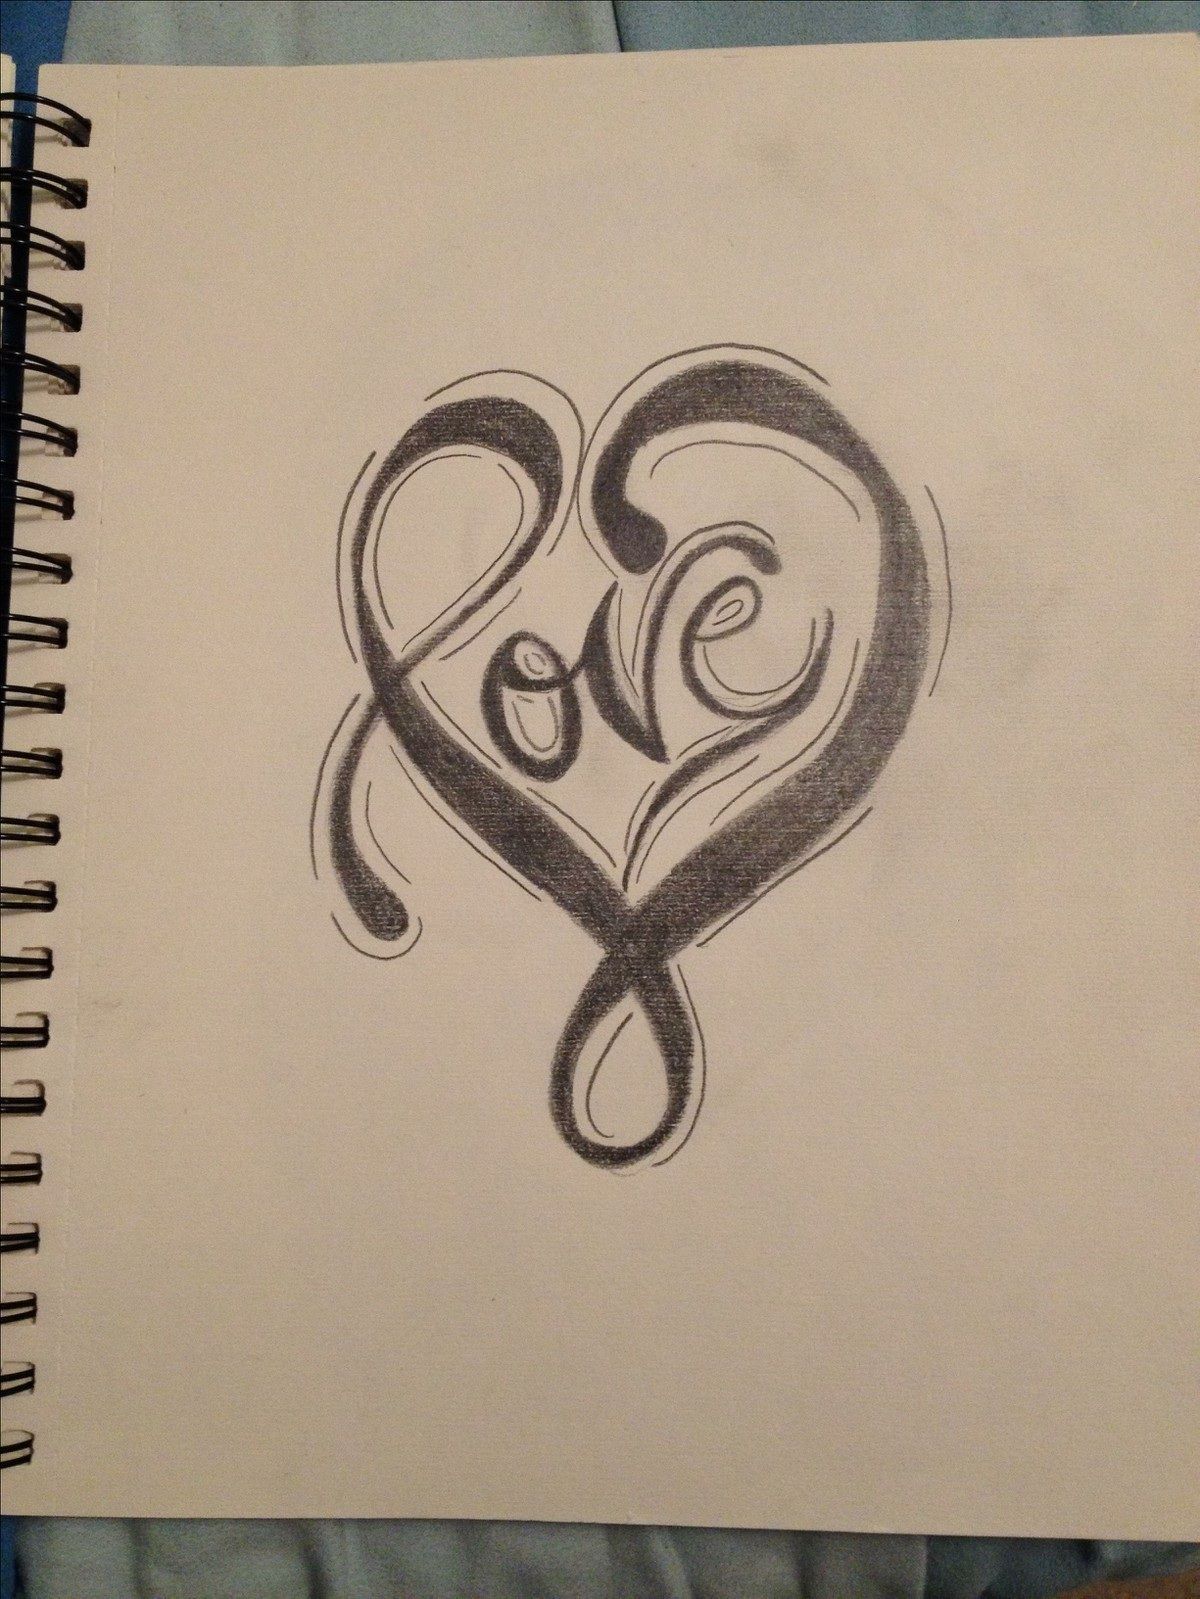 love couple sketch wallpaper,spiral,drawing,heart,sketch,notebook